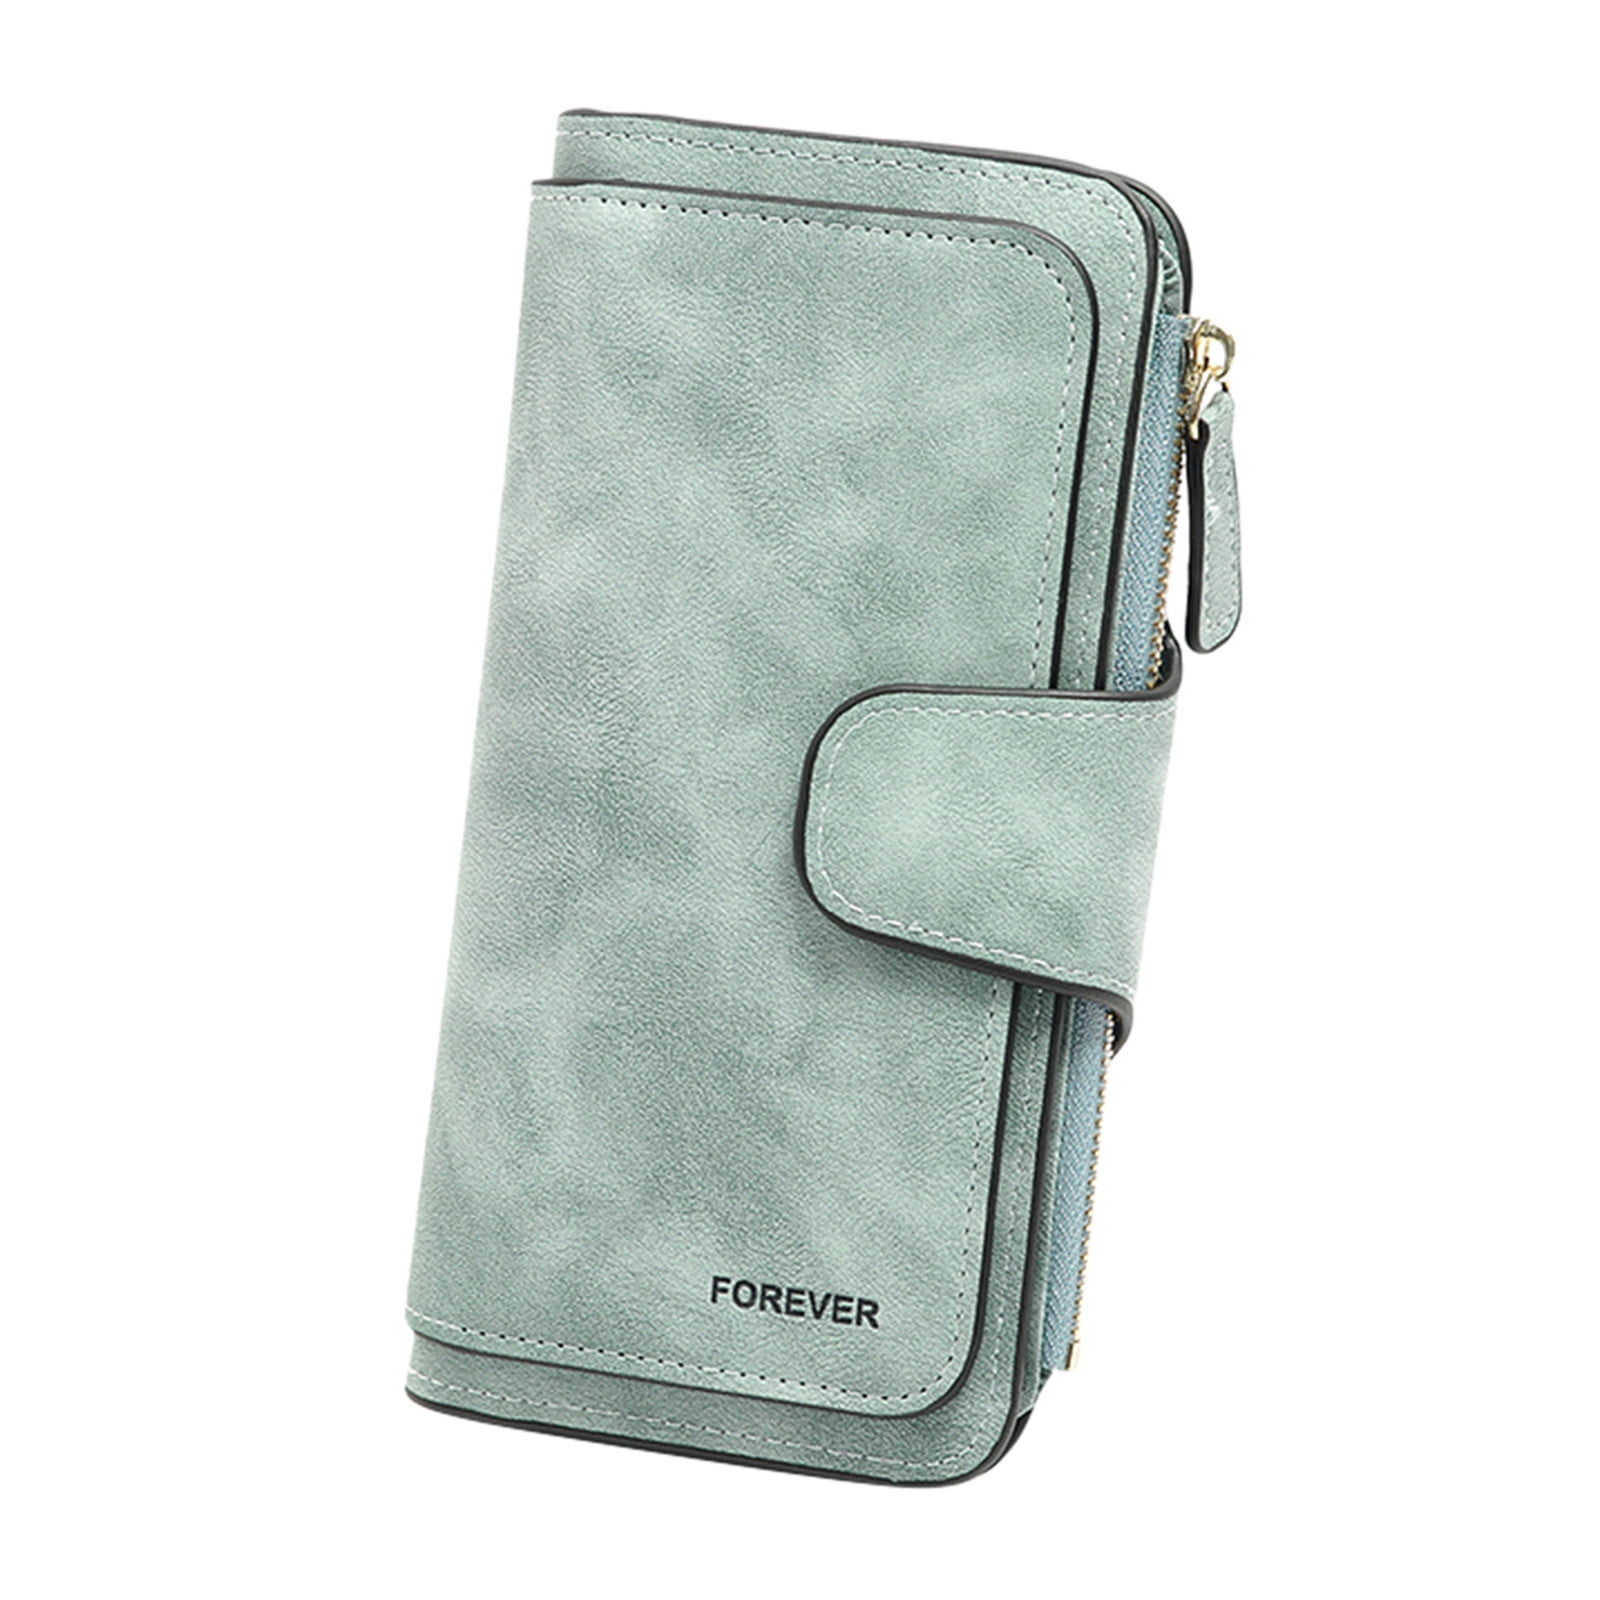 Buy TnW Womens Girls PU Leather Multipurpose Zip Wallet Card Holder Purse  Clutch (Beige) at Amazon.in